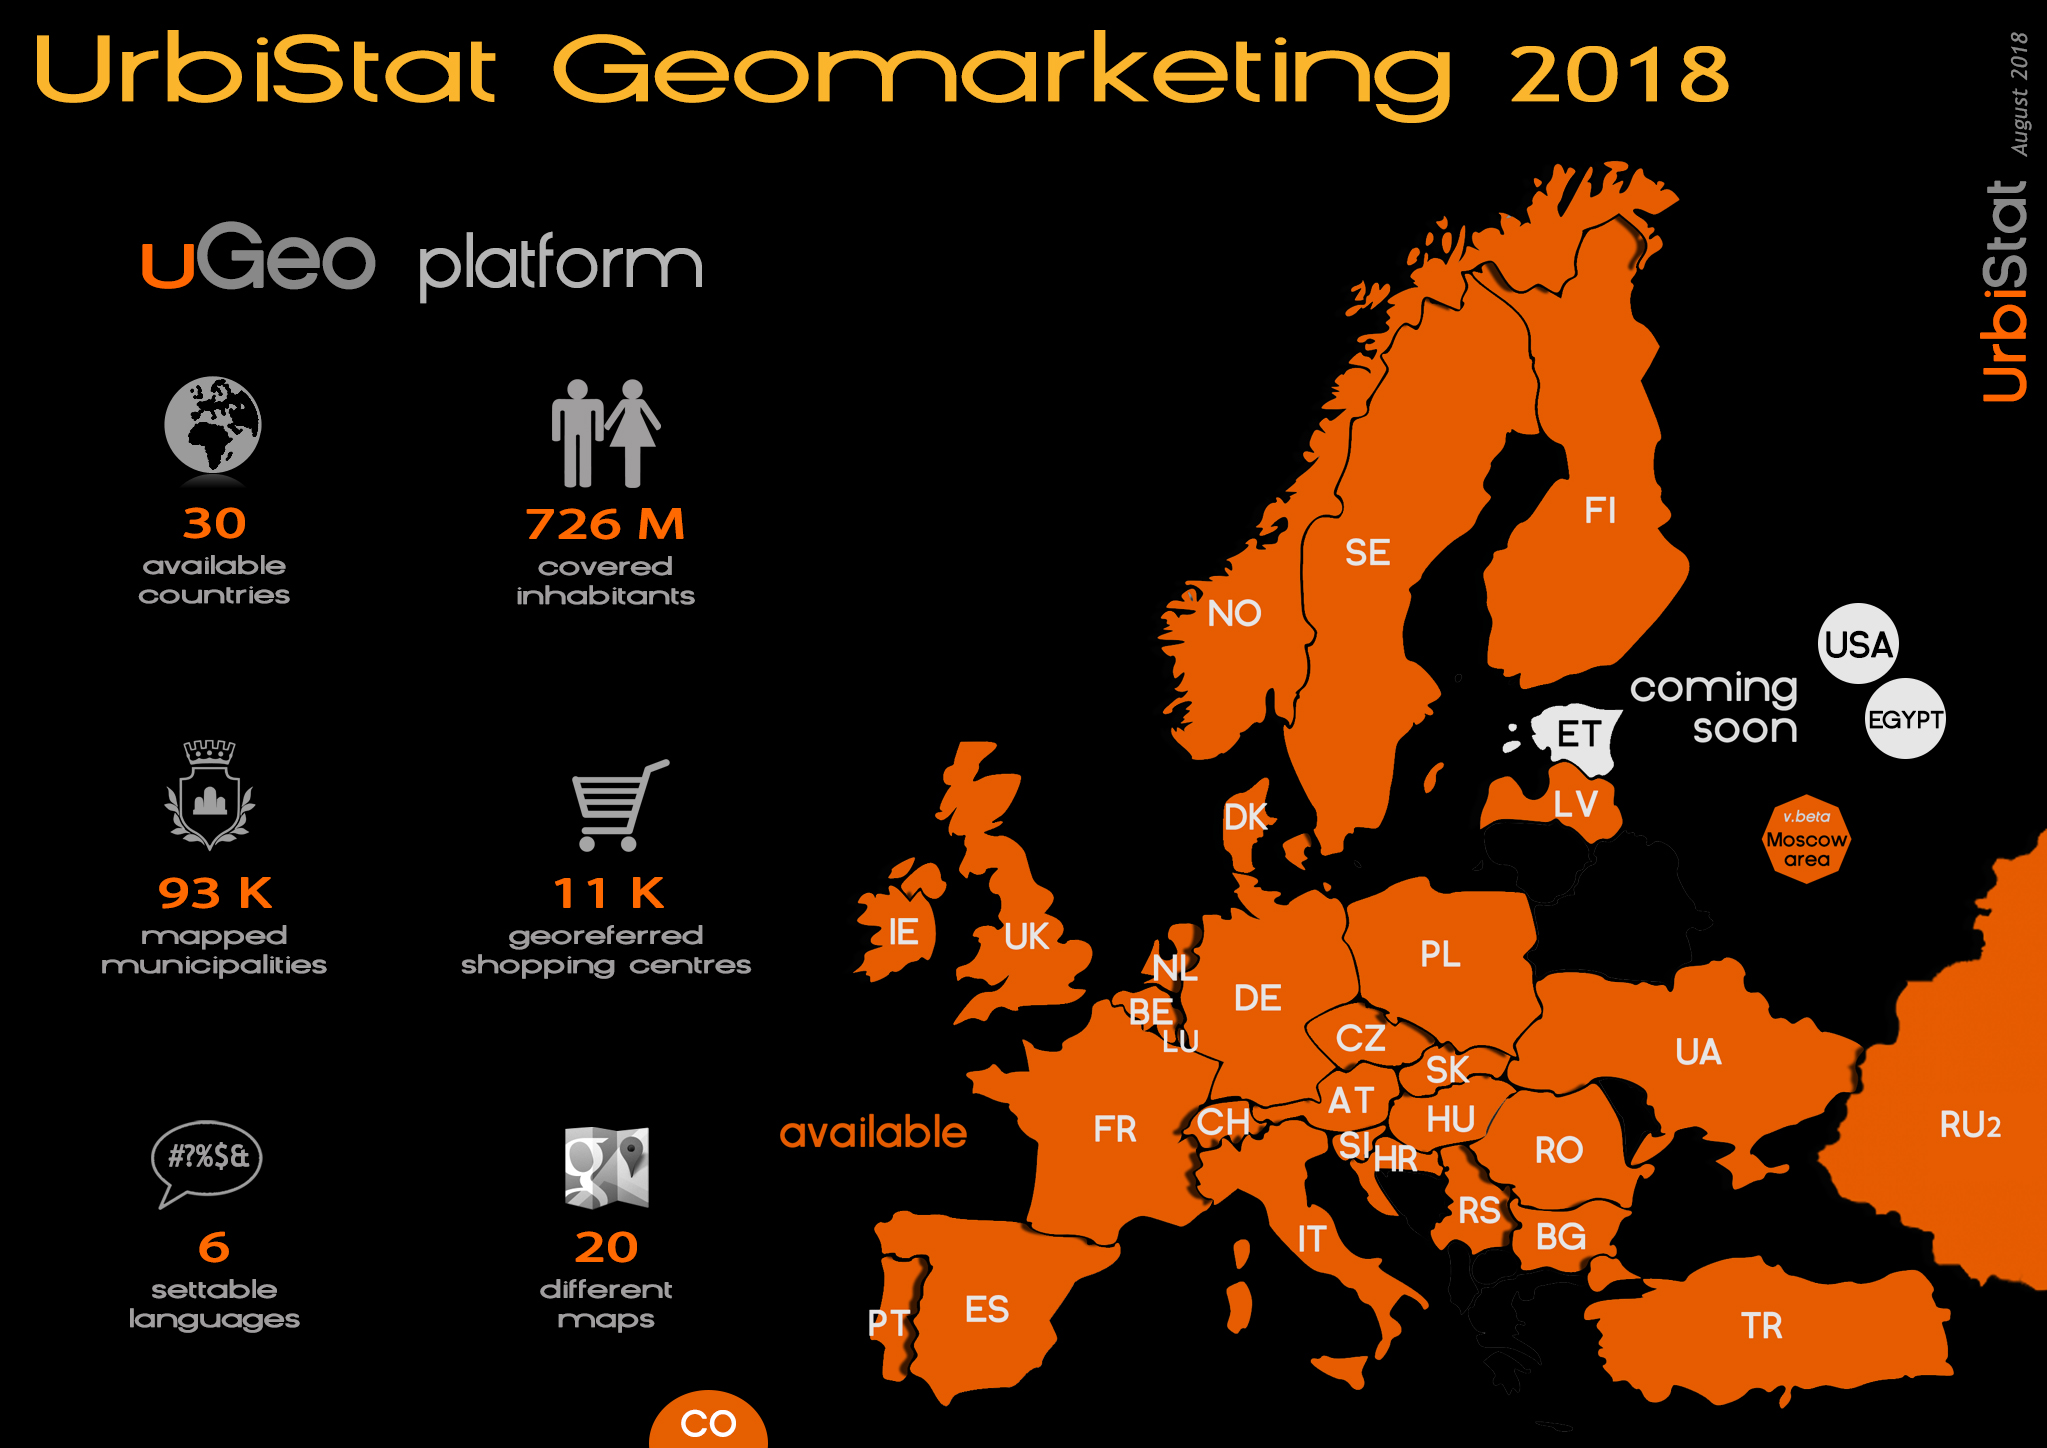 UrbiStat Geomarketing 2018 – Coverage